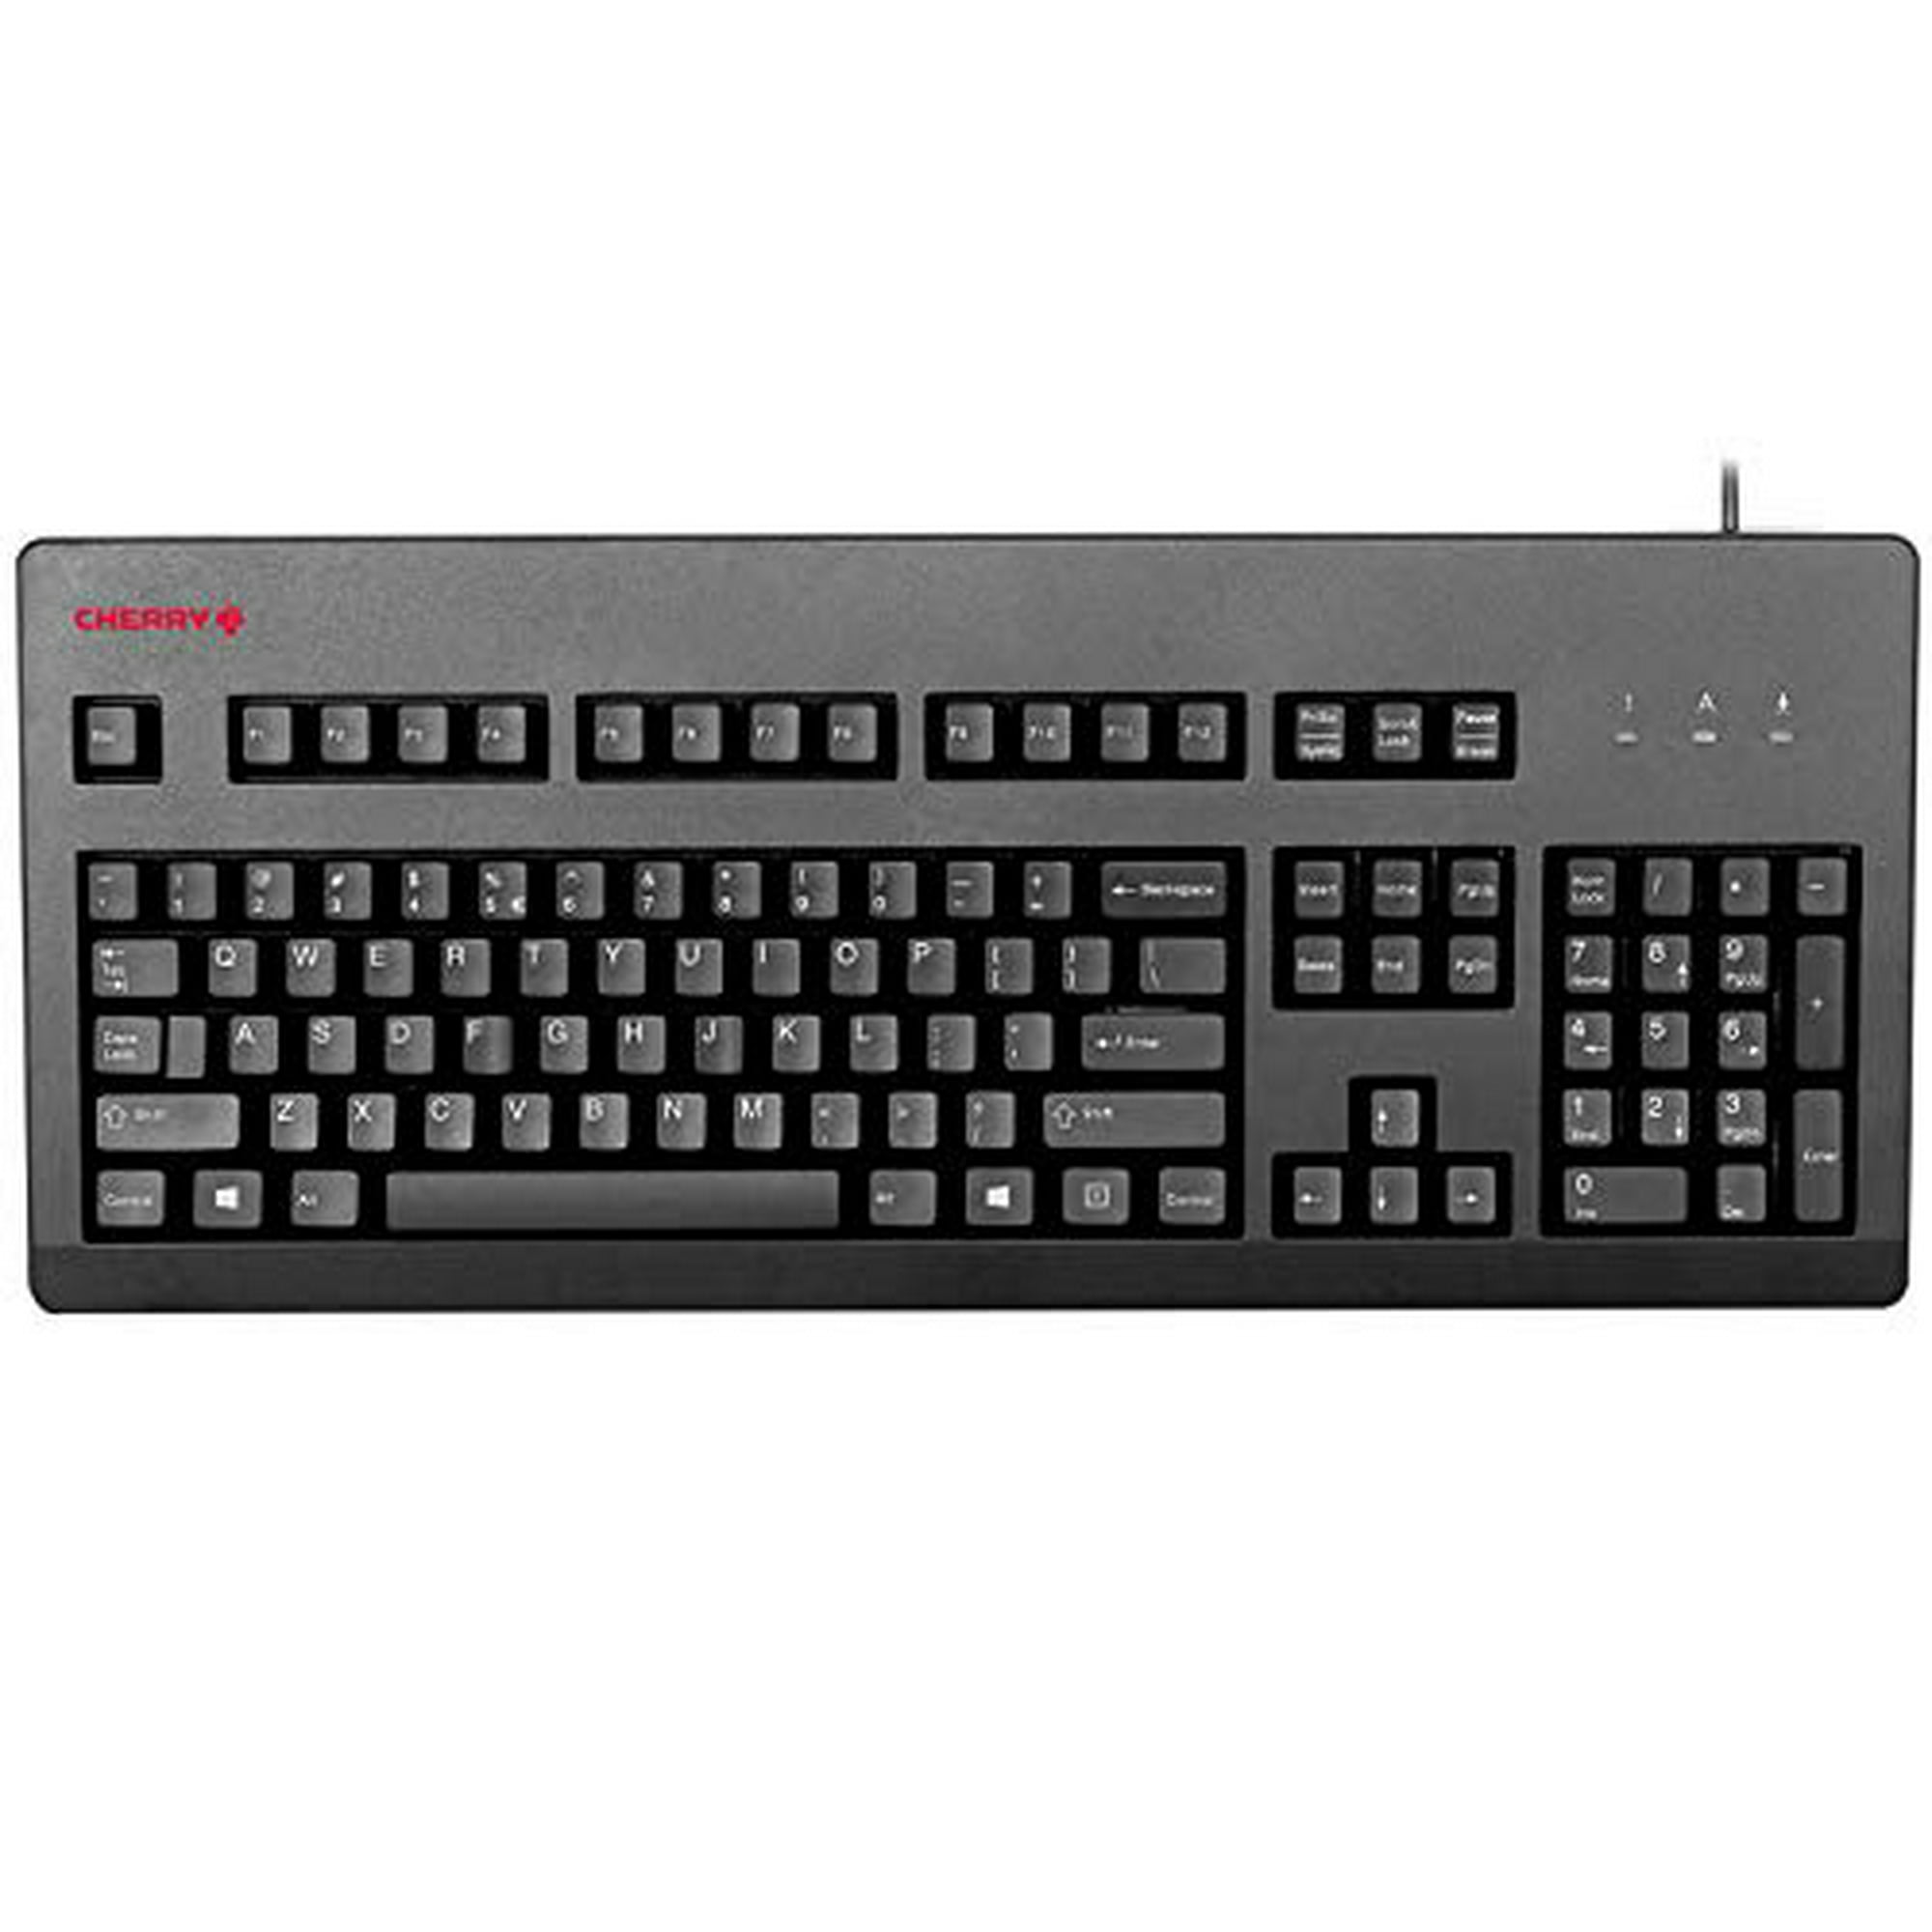 Parat stå Egen CHERRY G80 3000 Silent Keyboard - Red MX Silent Switch - USB - PS/2 - Retro  Look - Black (G80-3000LSCEU-2) | Walmart Canada